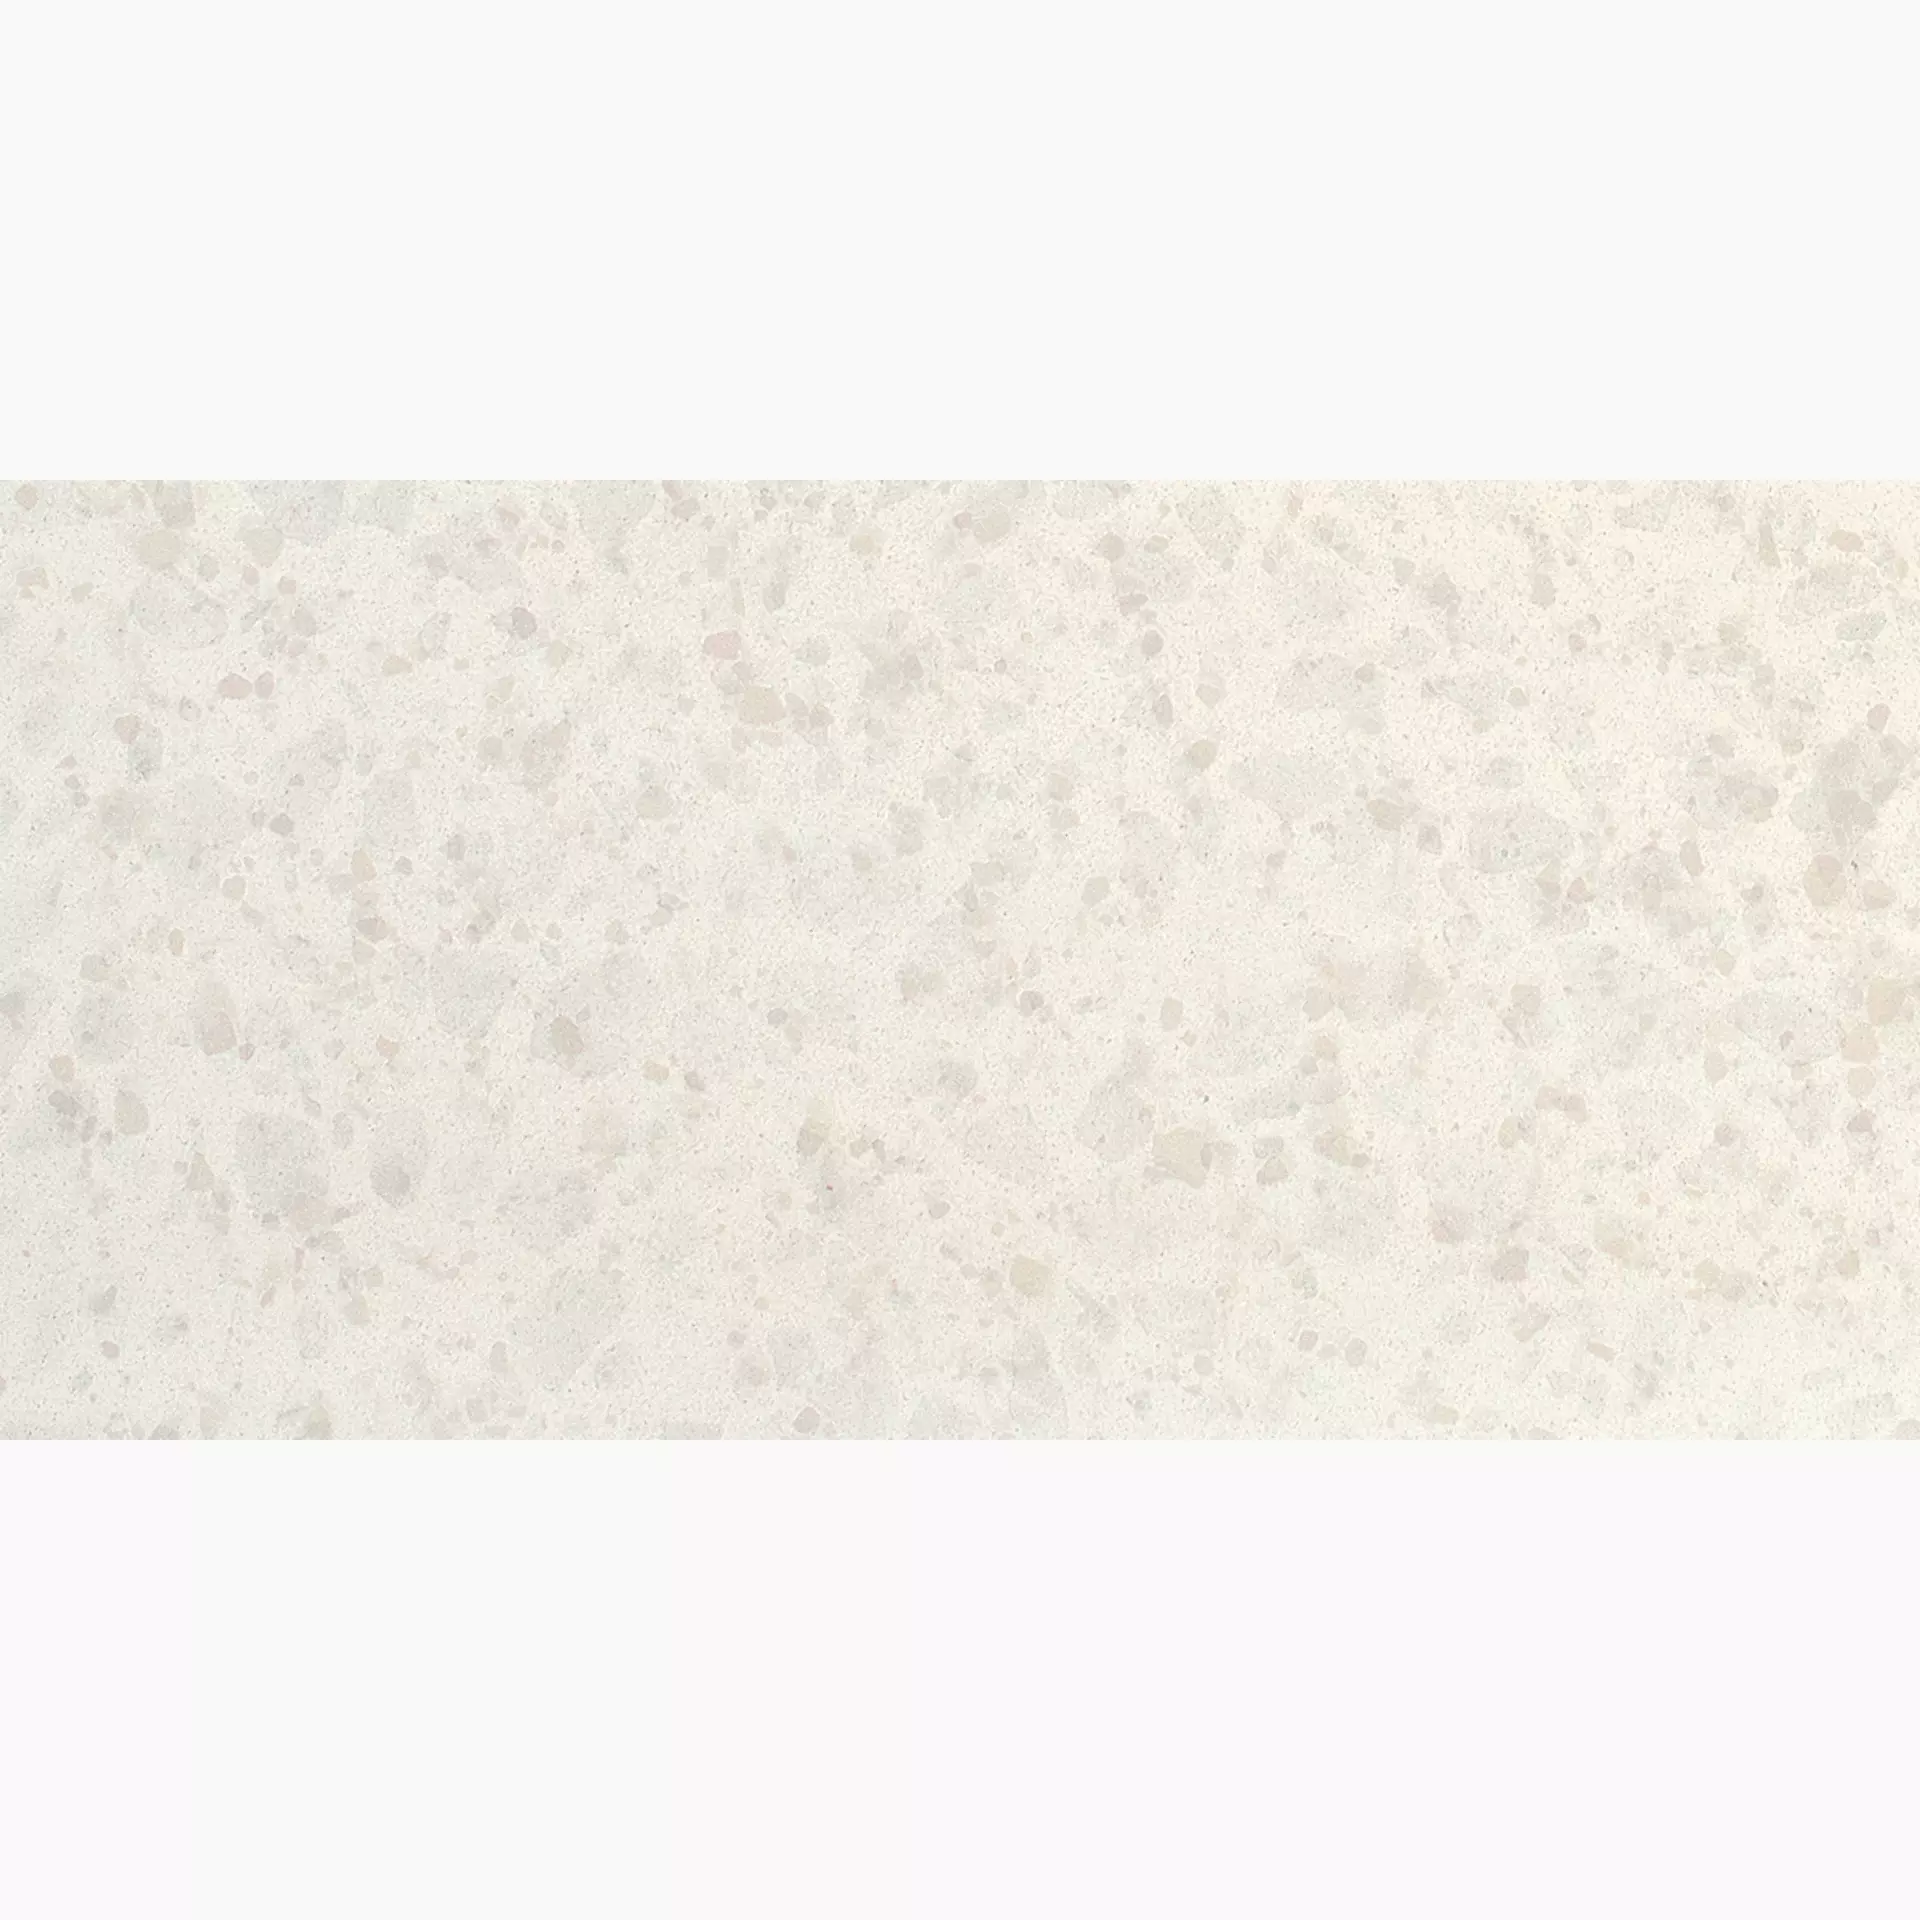 Gigacer Inclusioni Soave Bianco Perla Matt 12INCL3060BIAPERMAT 30x60cm 12mm